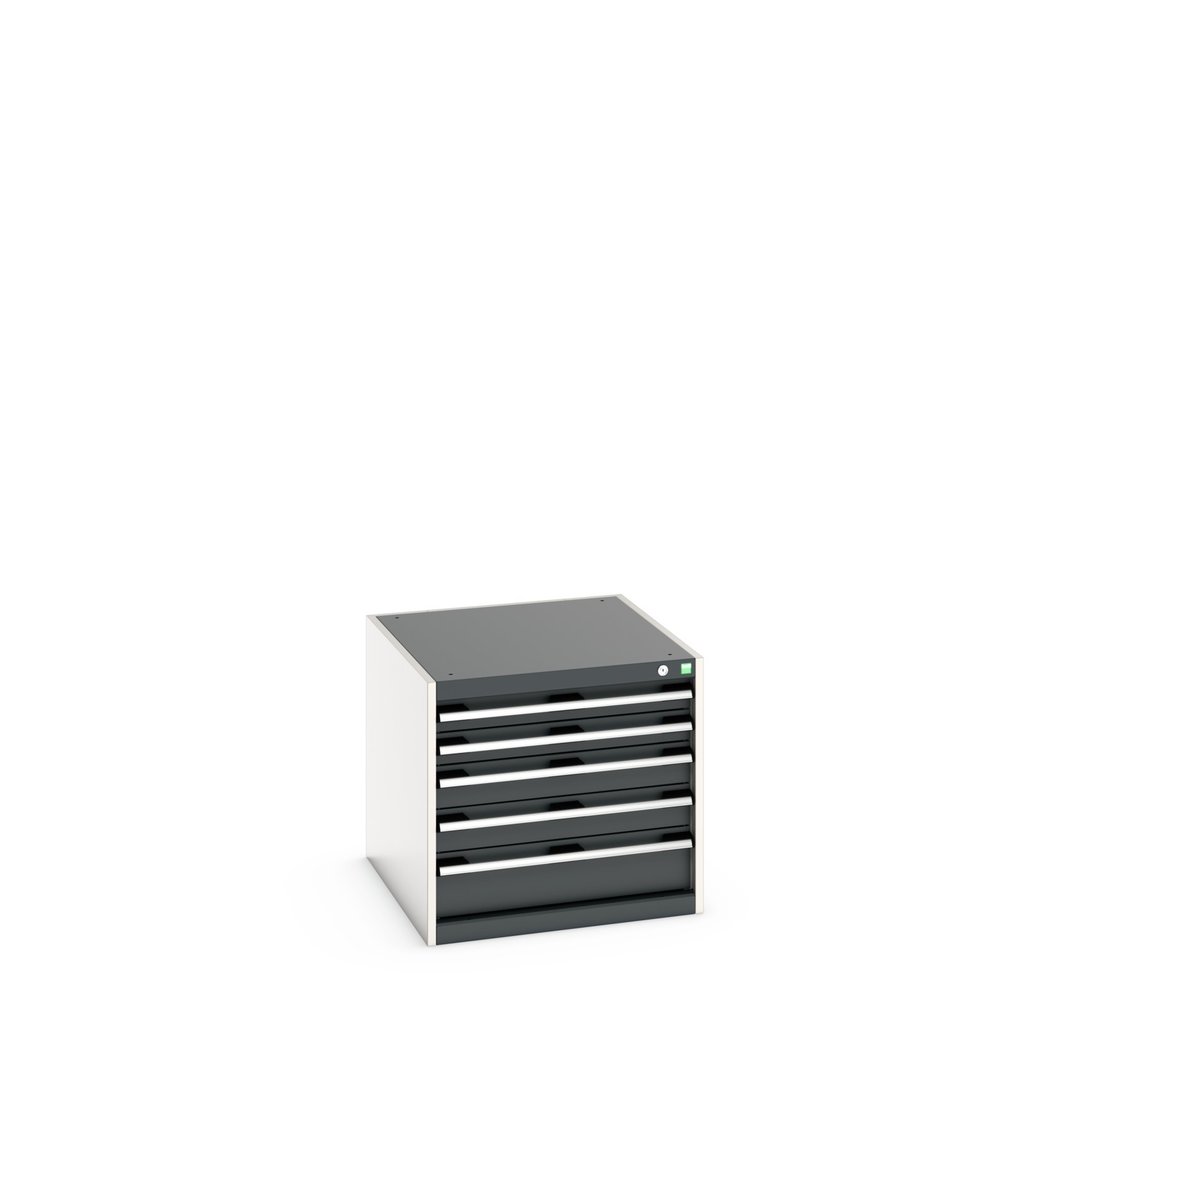 40027102. - cubio drawer cabinet 